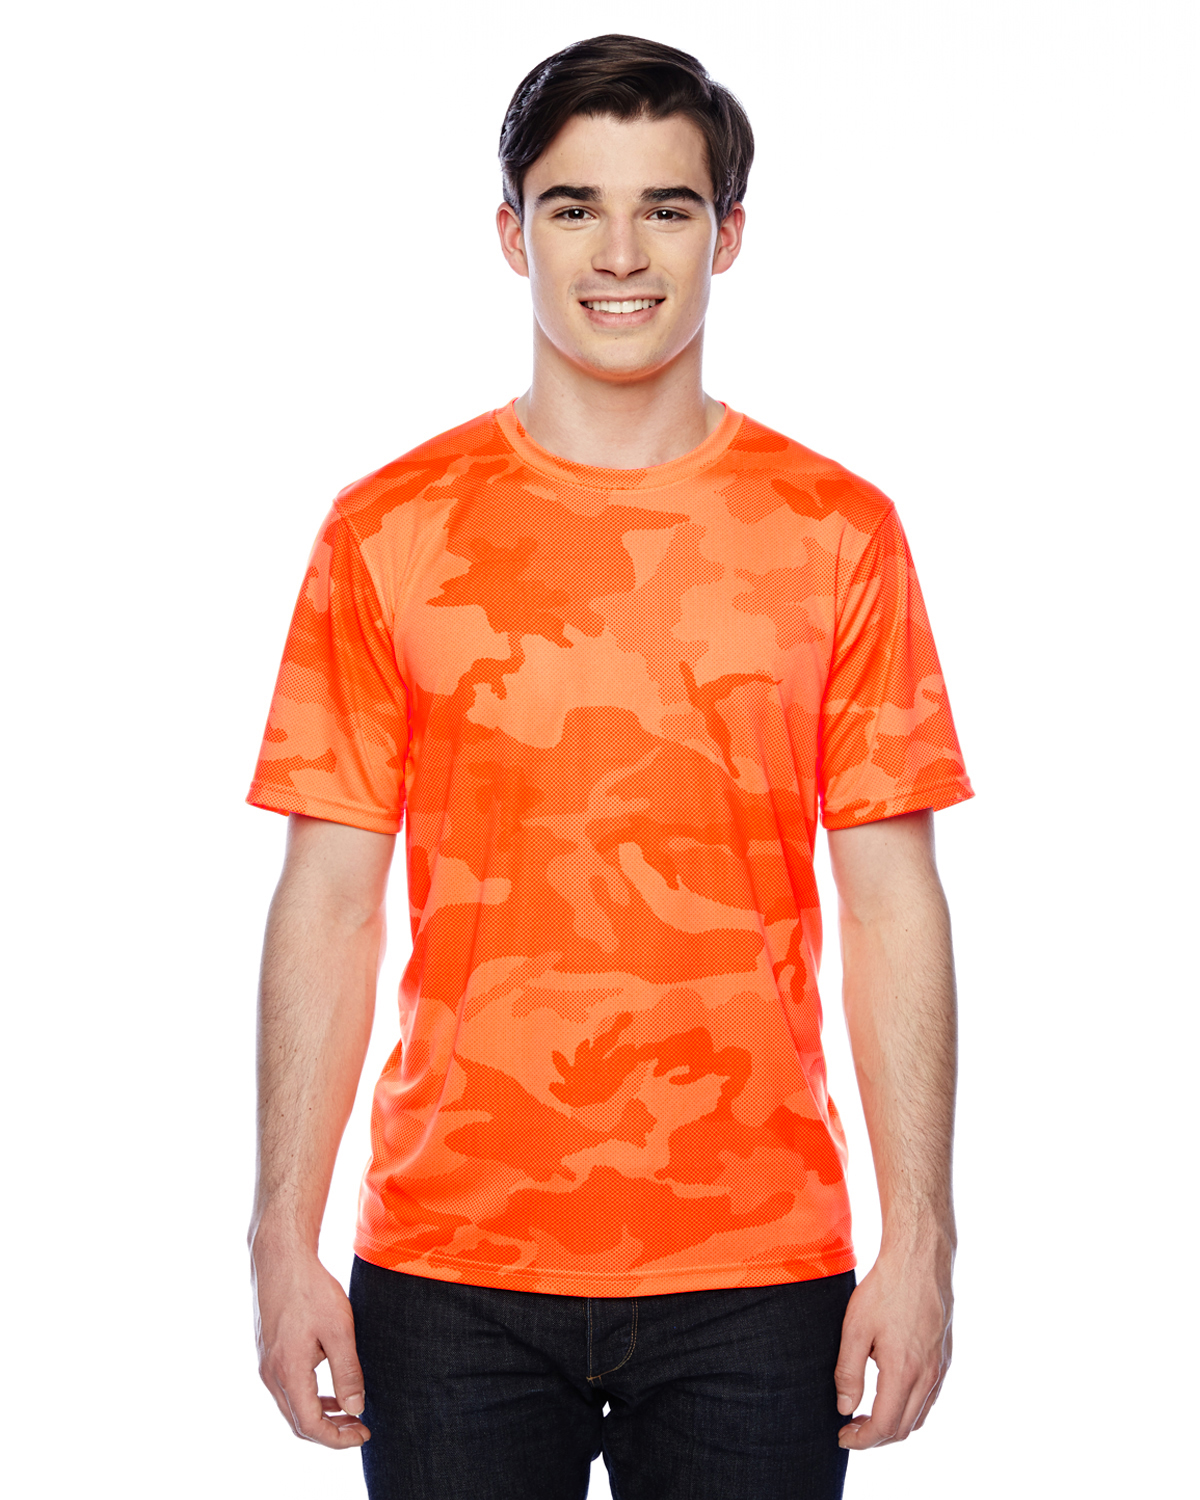 champion orange tshirt